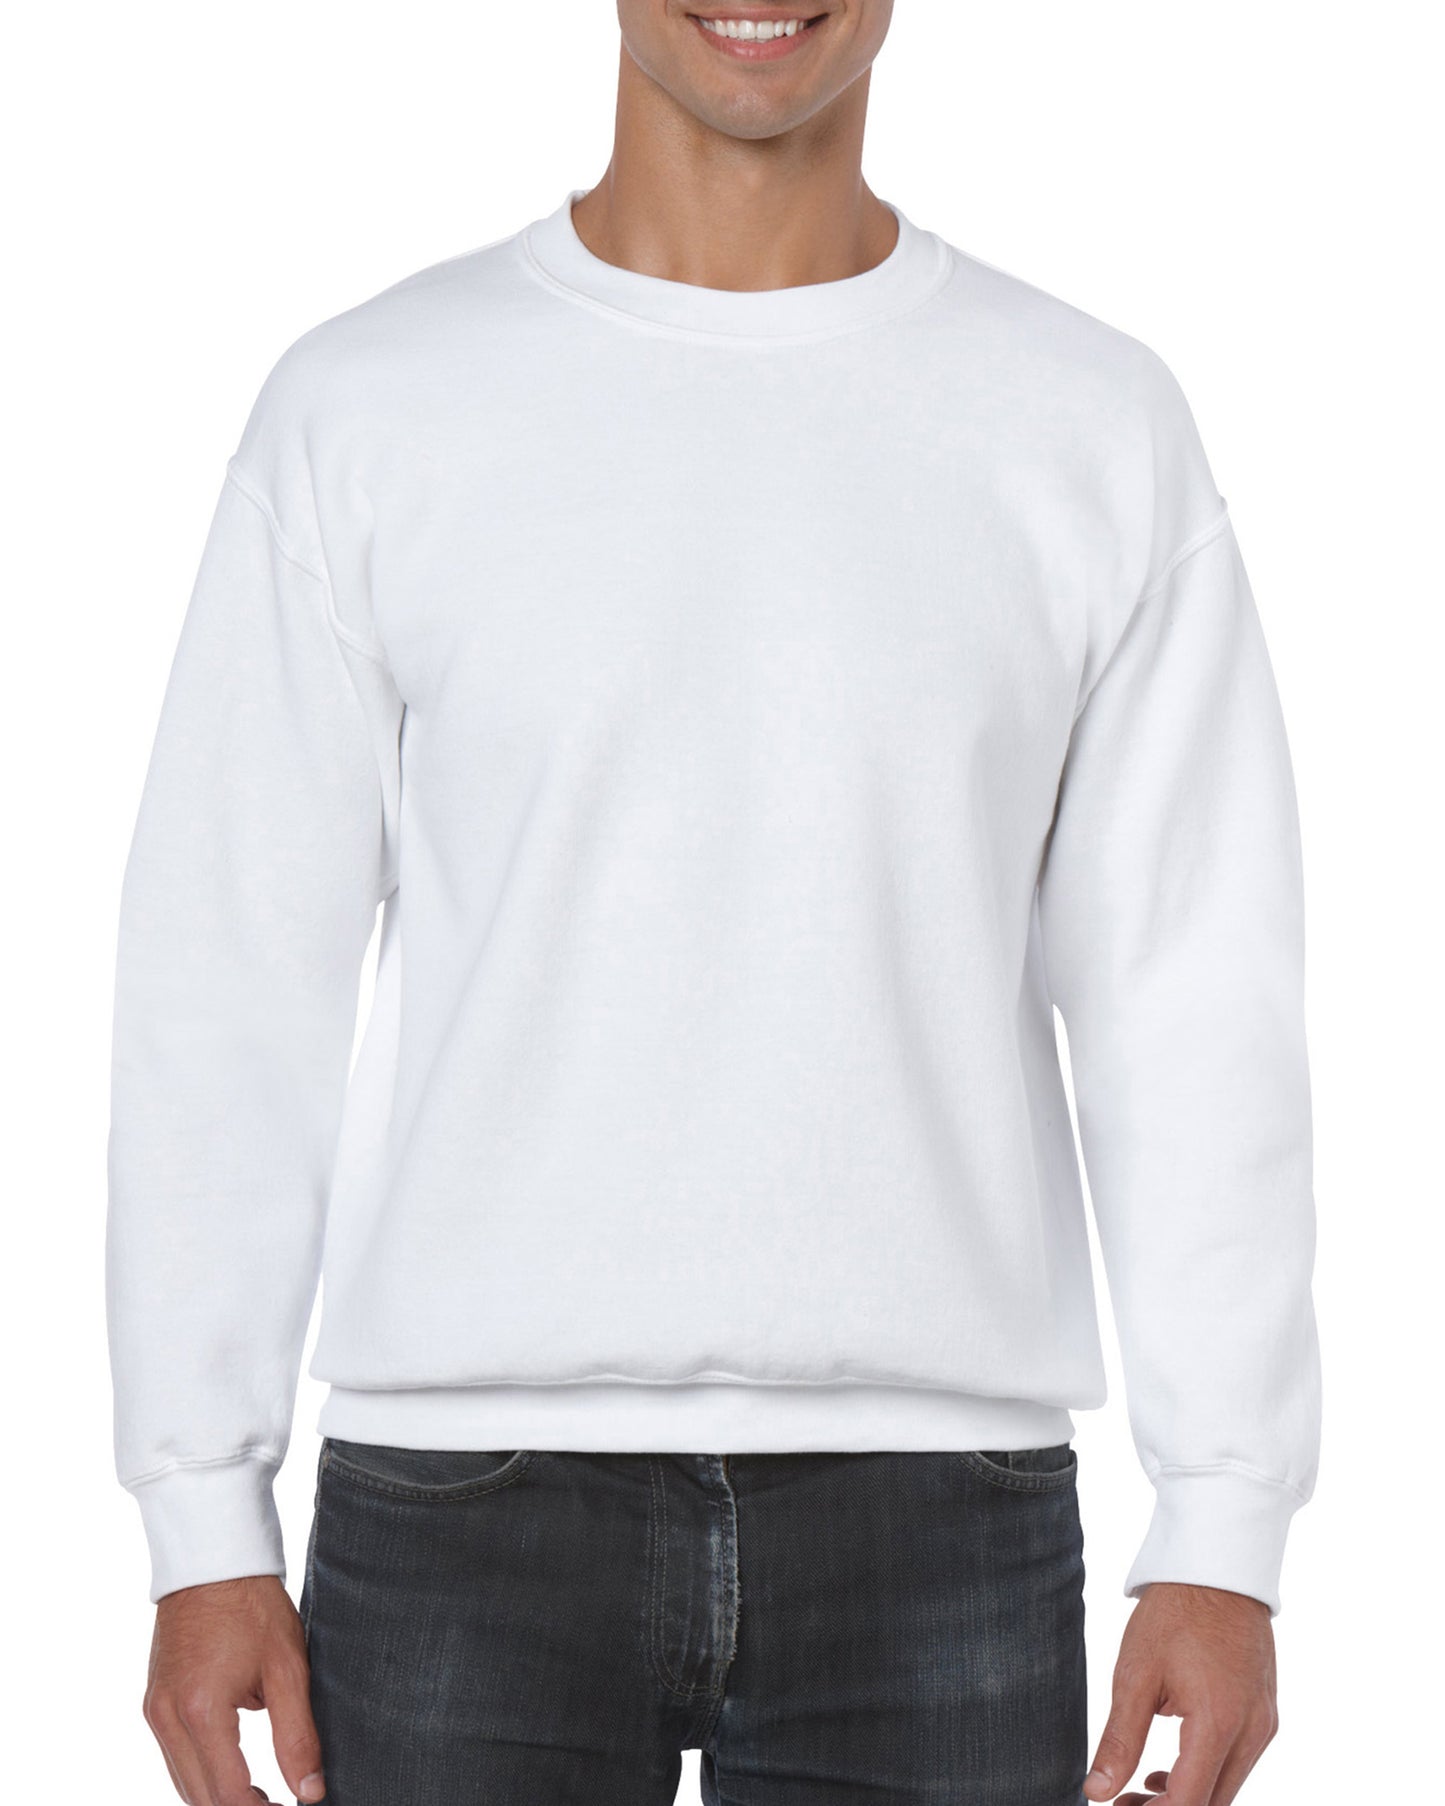 Mens Crewneck Sweatshirt White Only